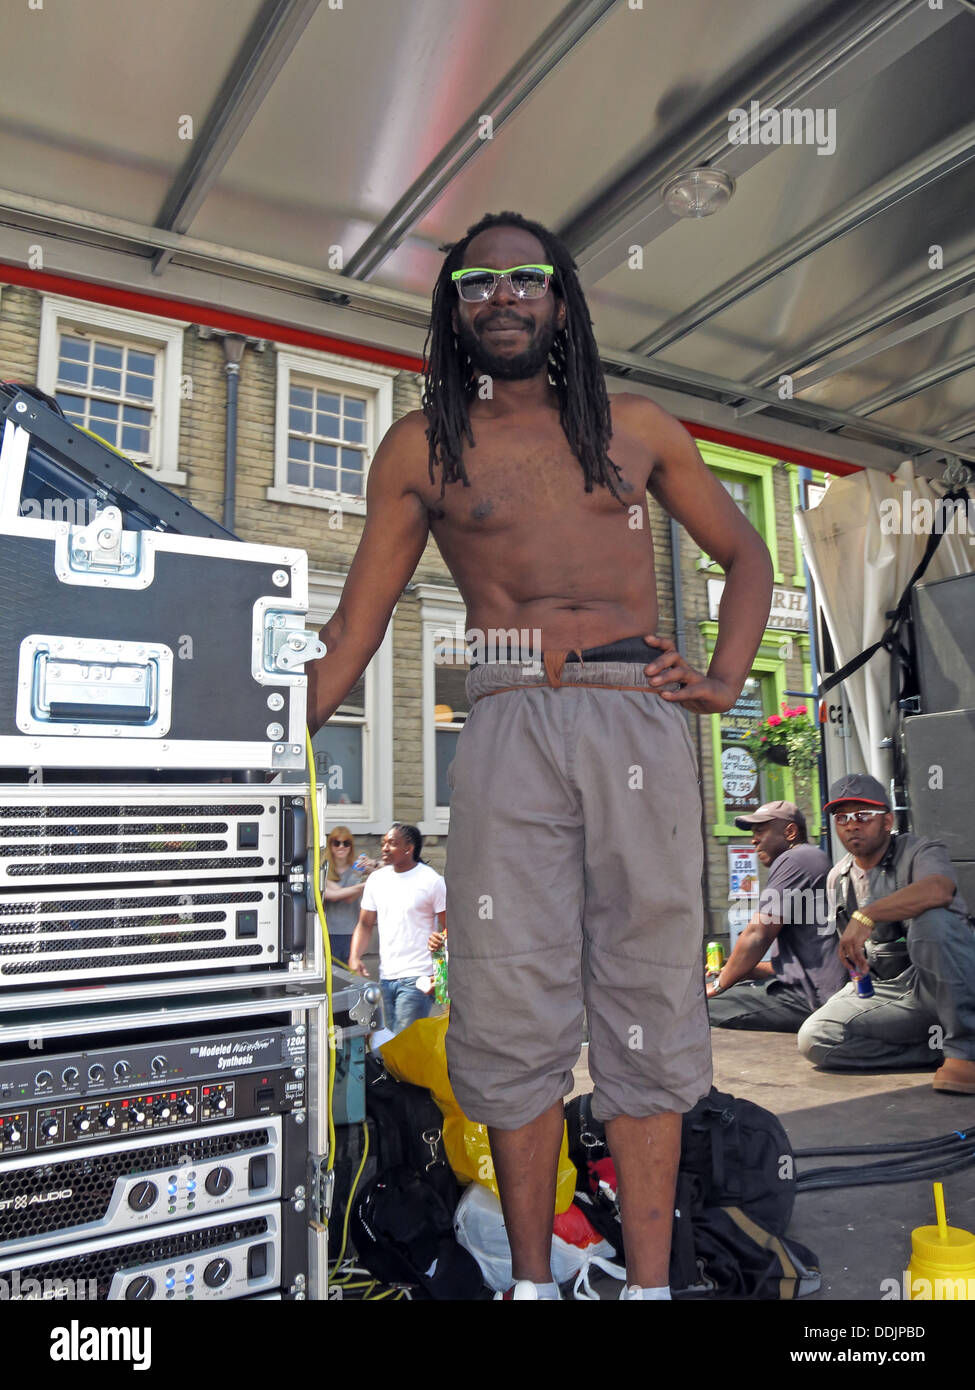 Klingen Sie Guy aus Huddersfield Karneval 2013 Afrika Karibik Parade Straßenfest Stockfoto